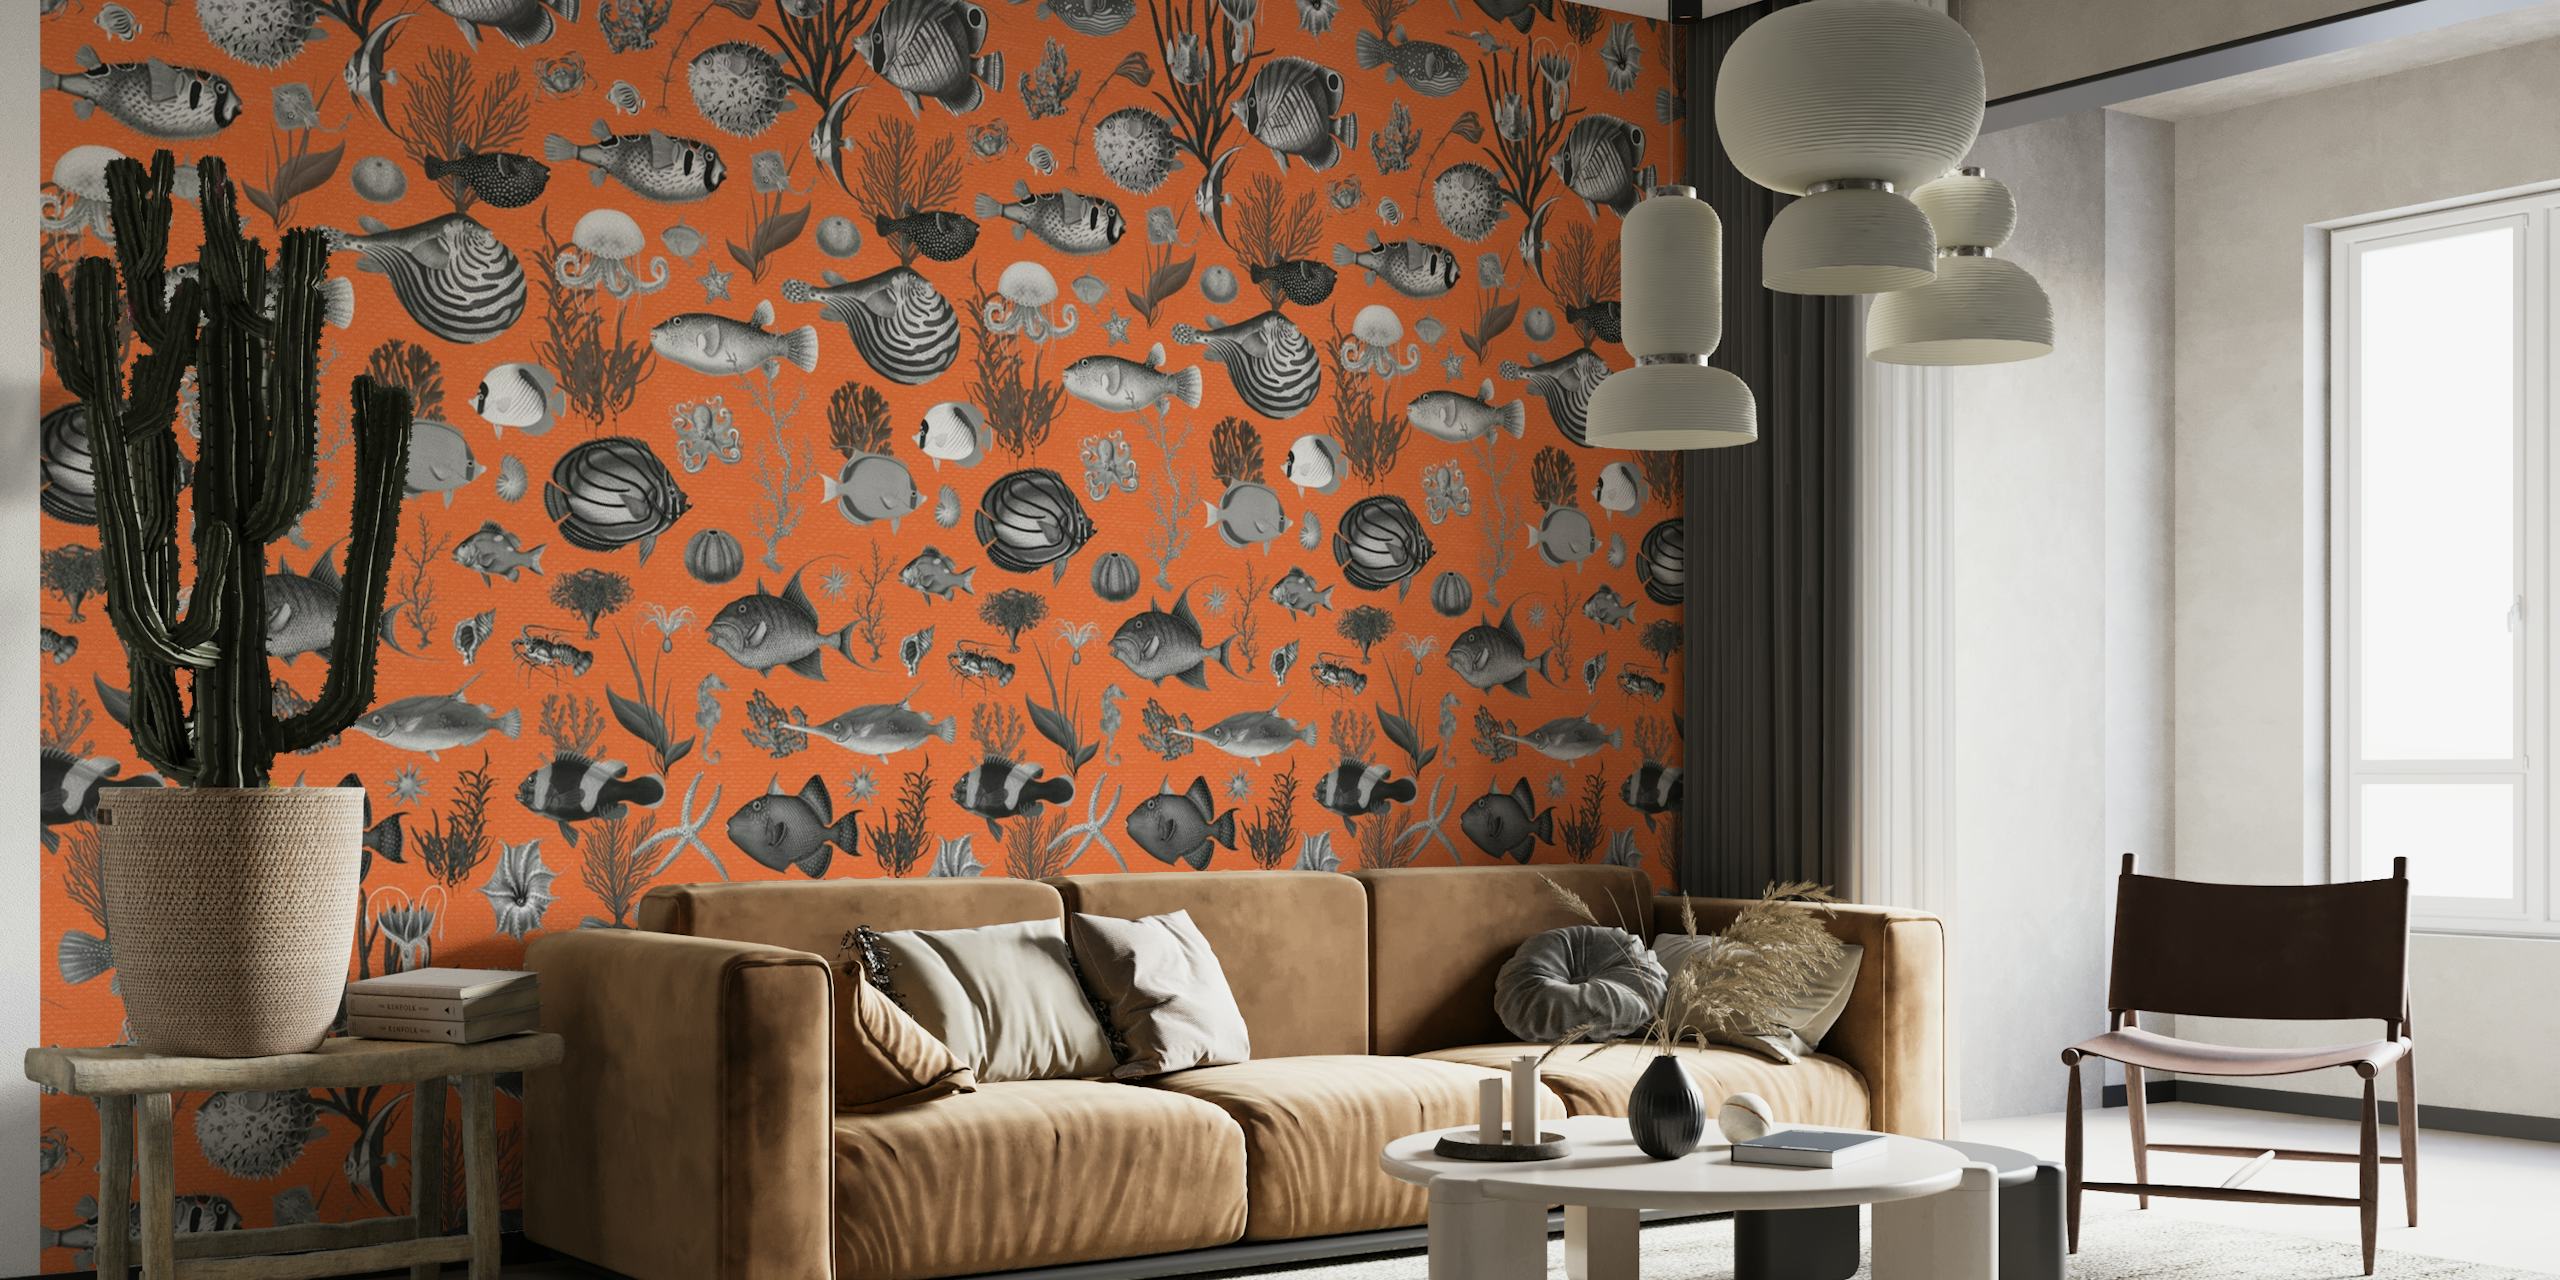 Abstrakt hav-inspireret vægmaleri med grå og orange marine mønstre